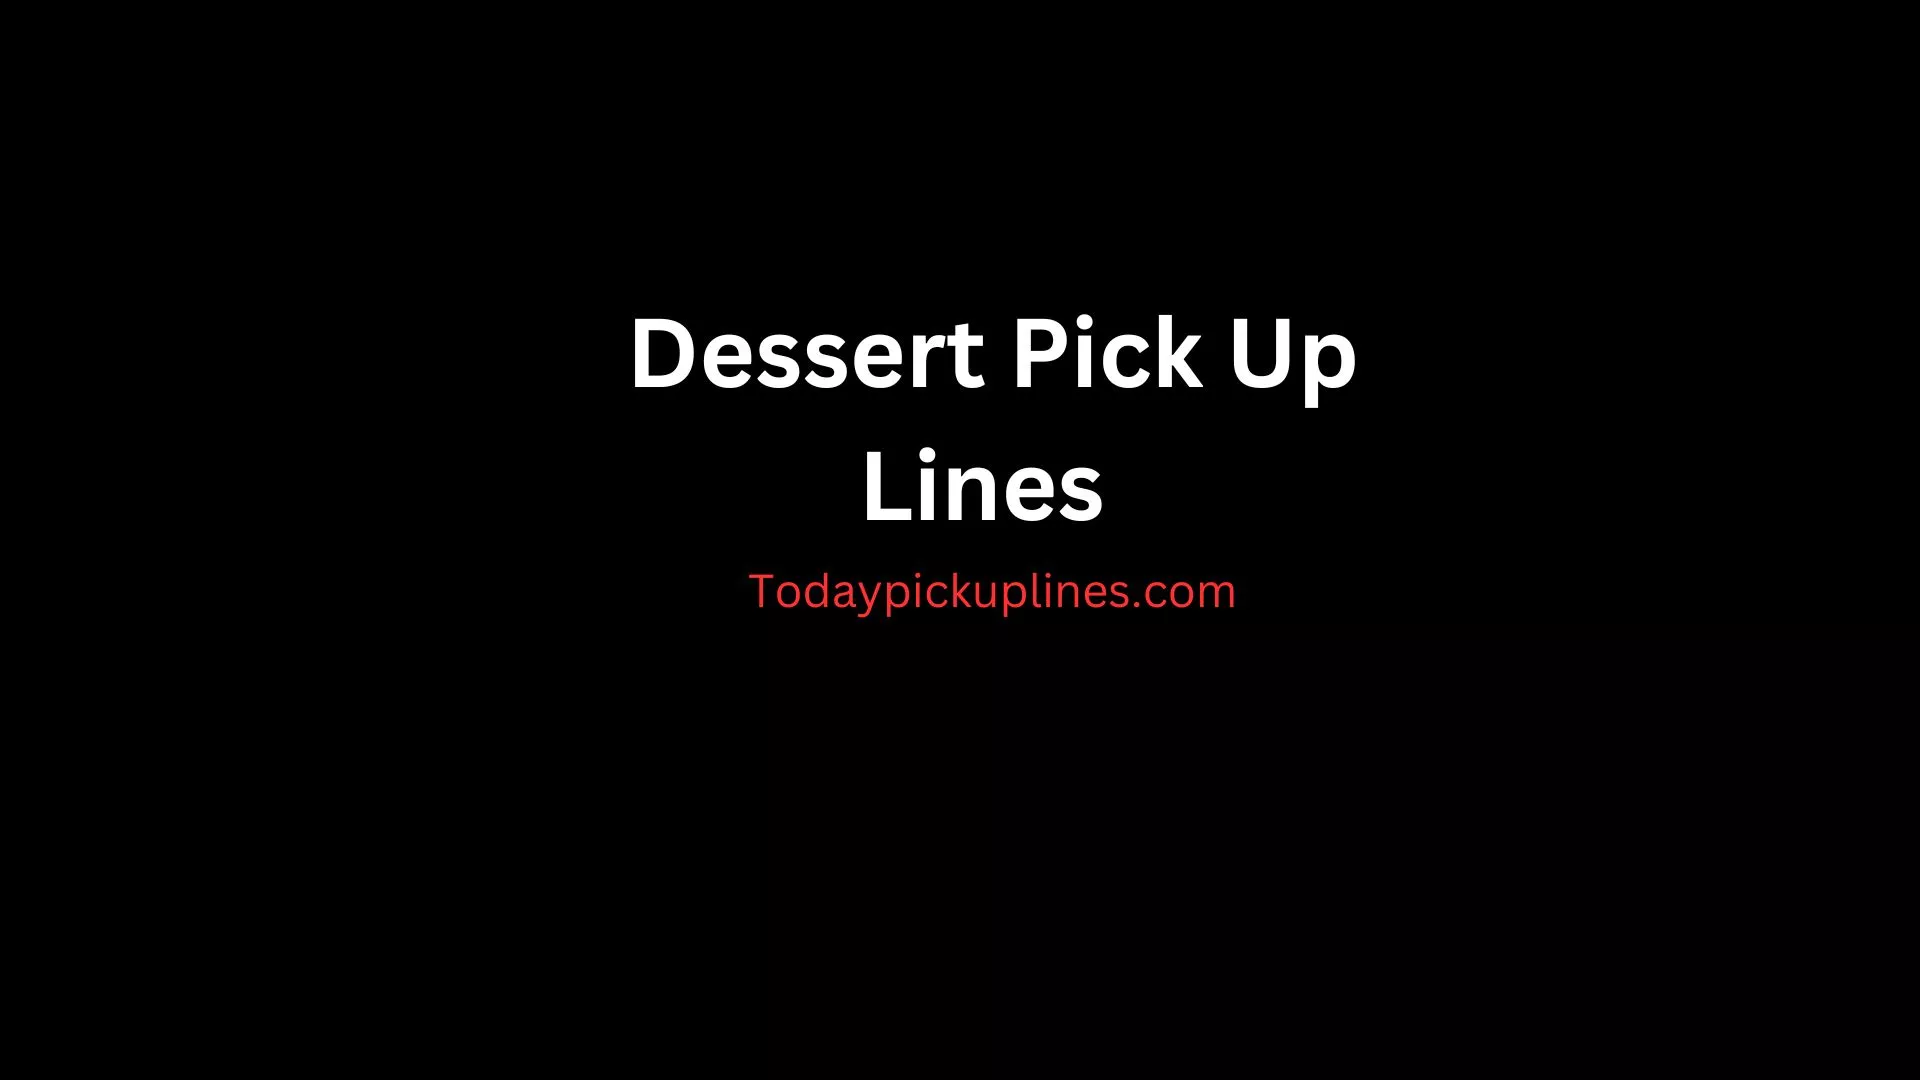 Dessert Pick Up Lines